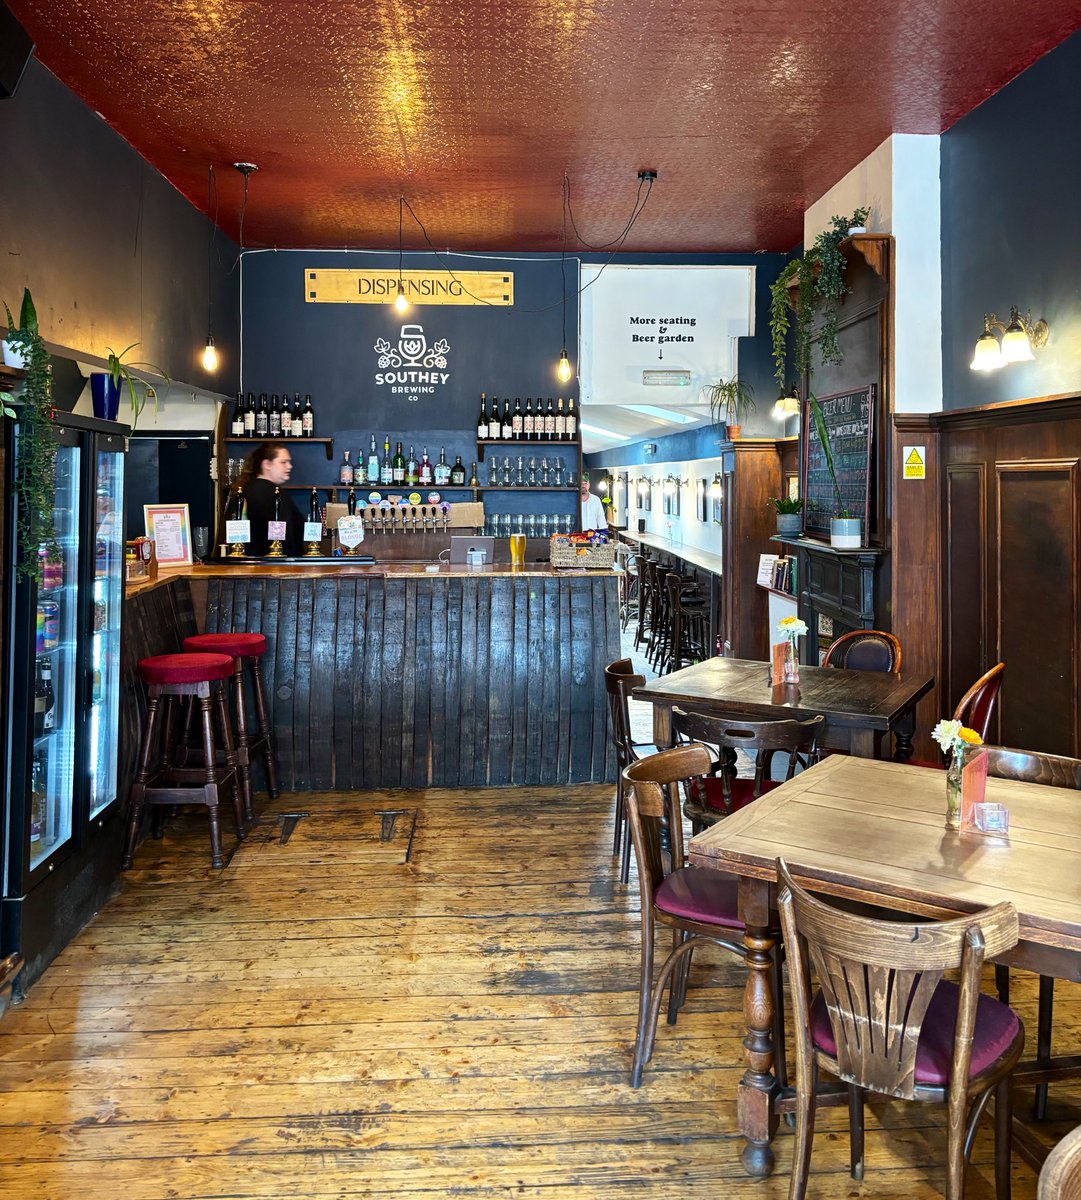 What an amazing Tap Room/Pub this place is. #croftonpark #southlondon #londonpub #londonbeerdispensay